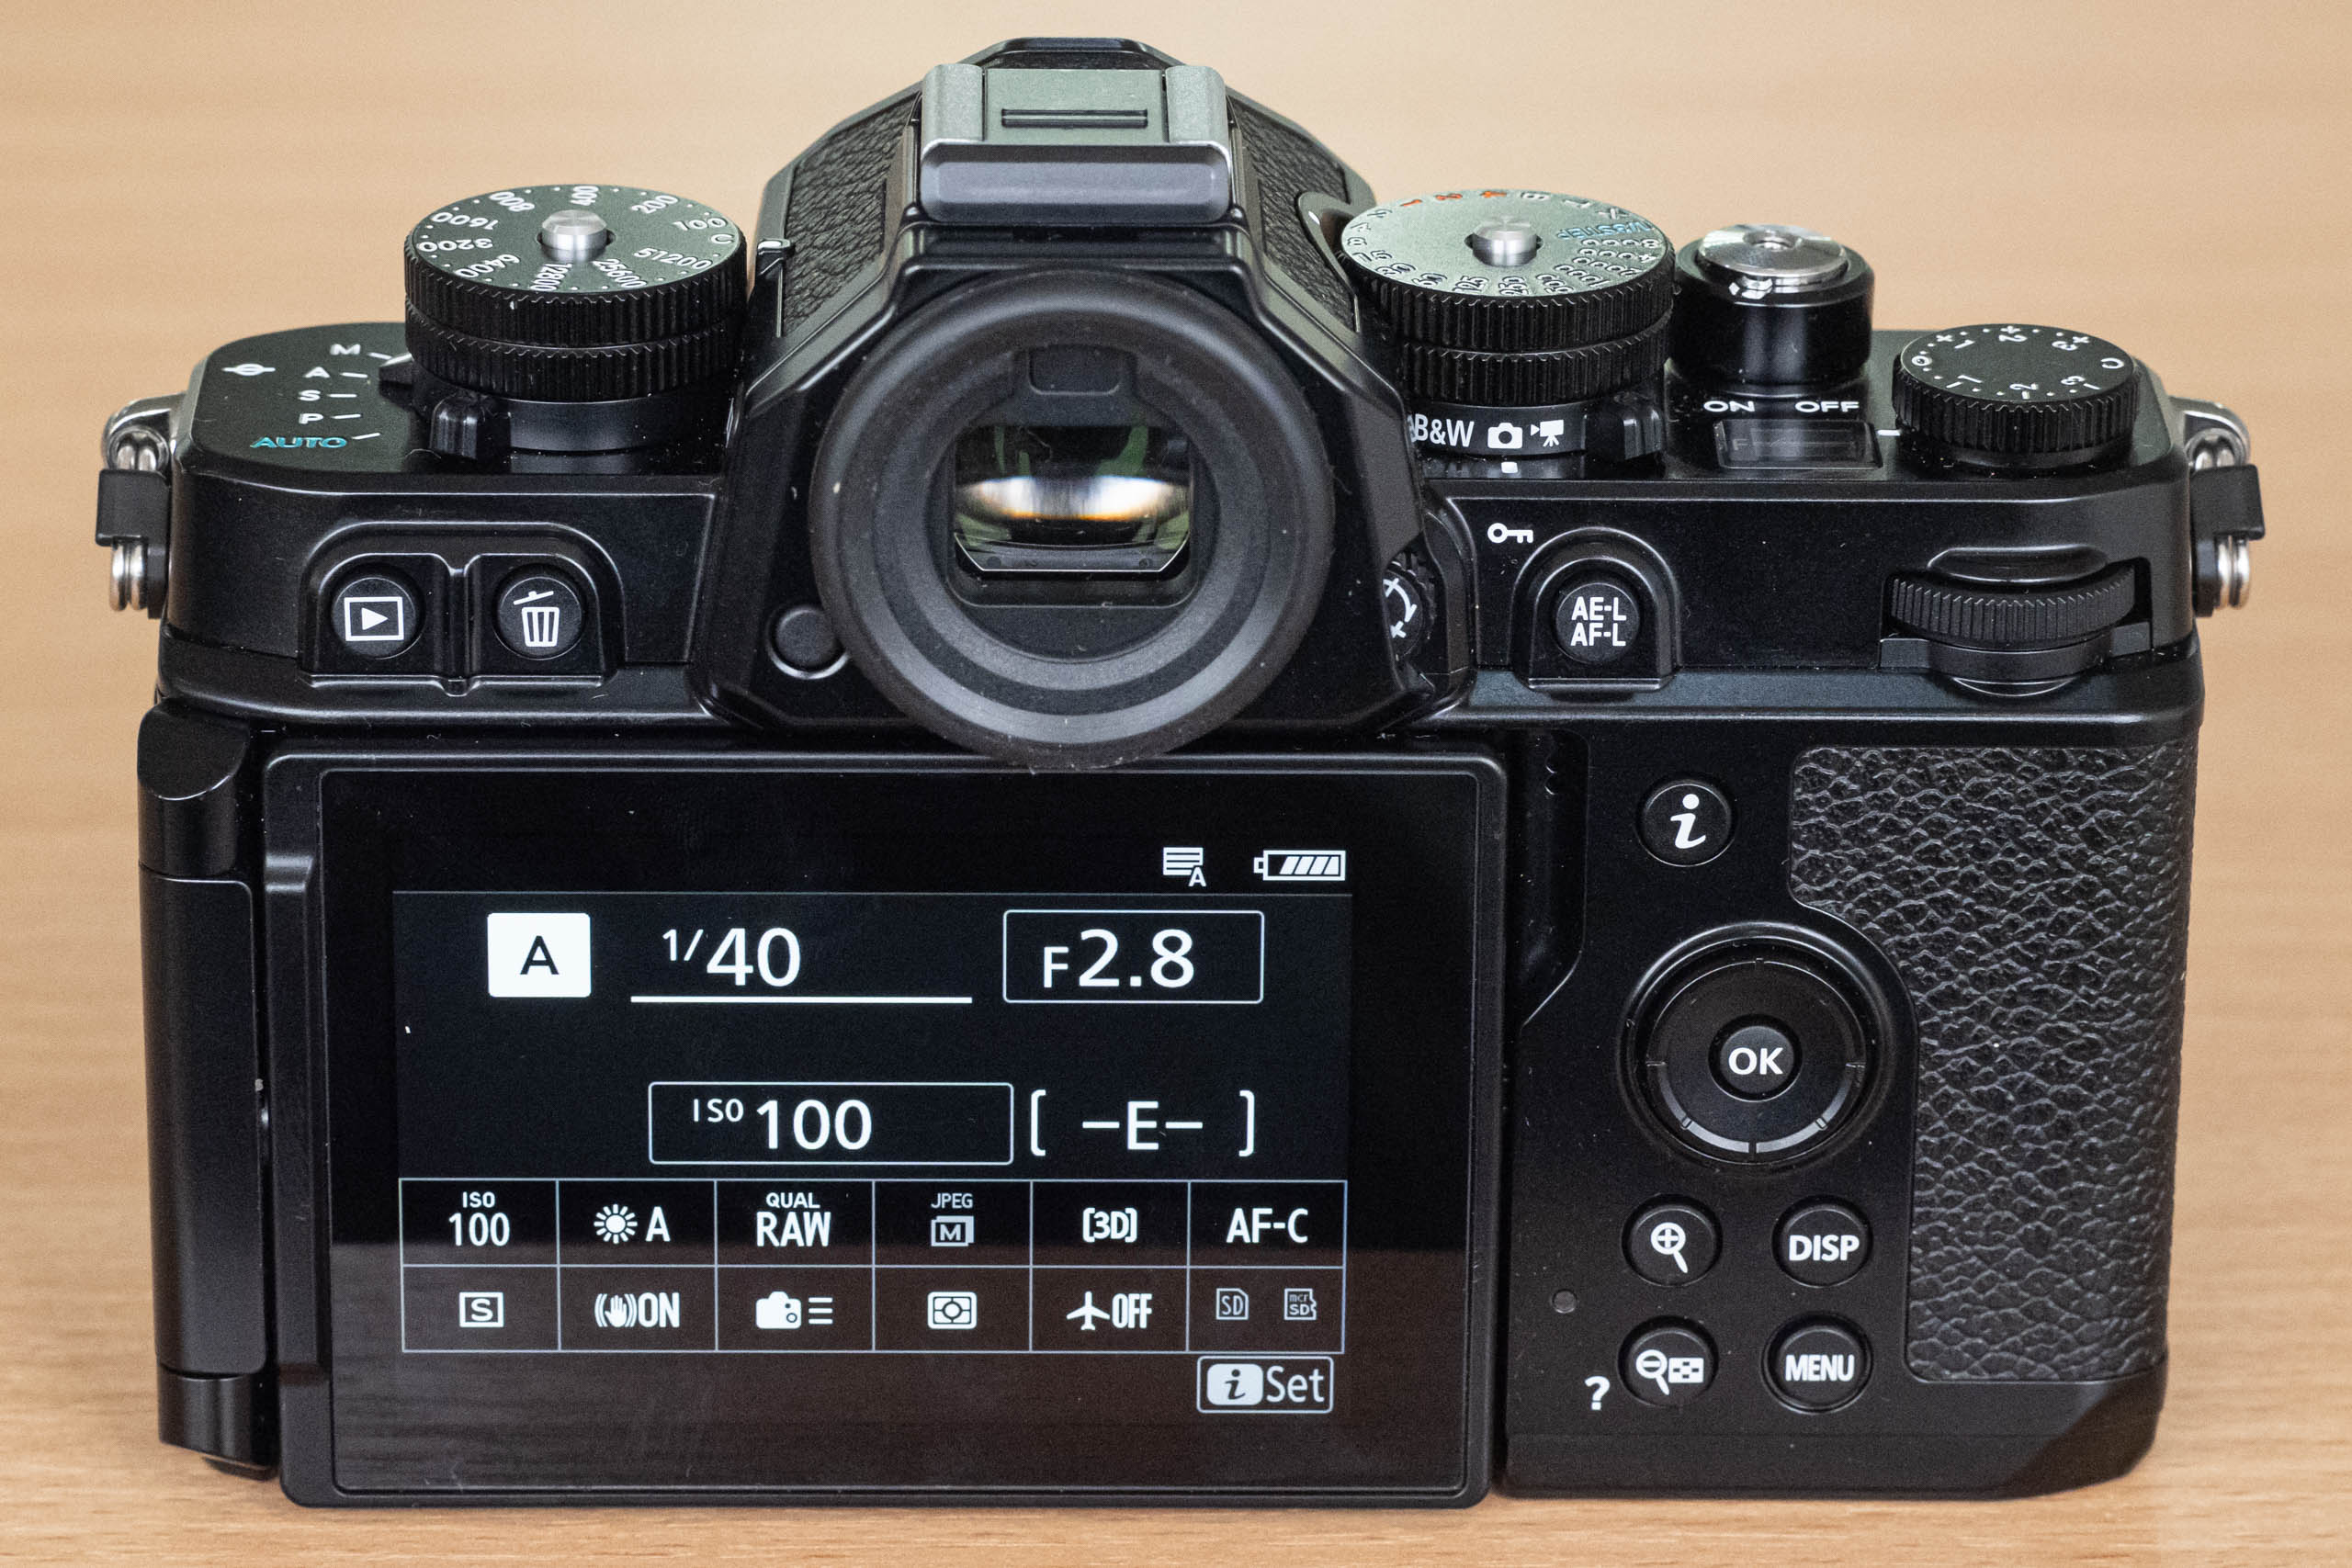 Nikon Zf in-depth review - Amateur Photographer